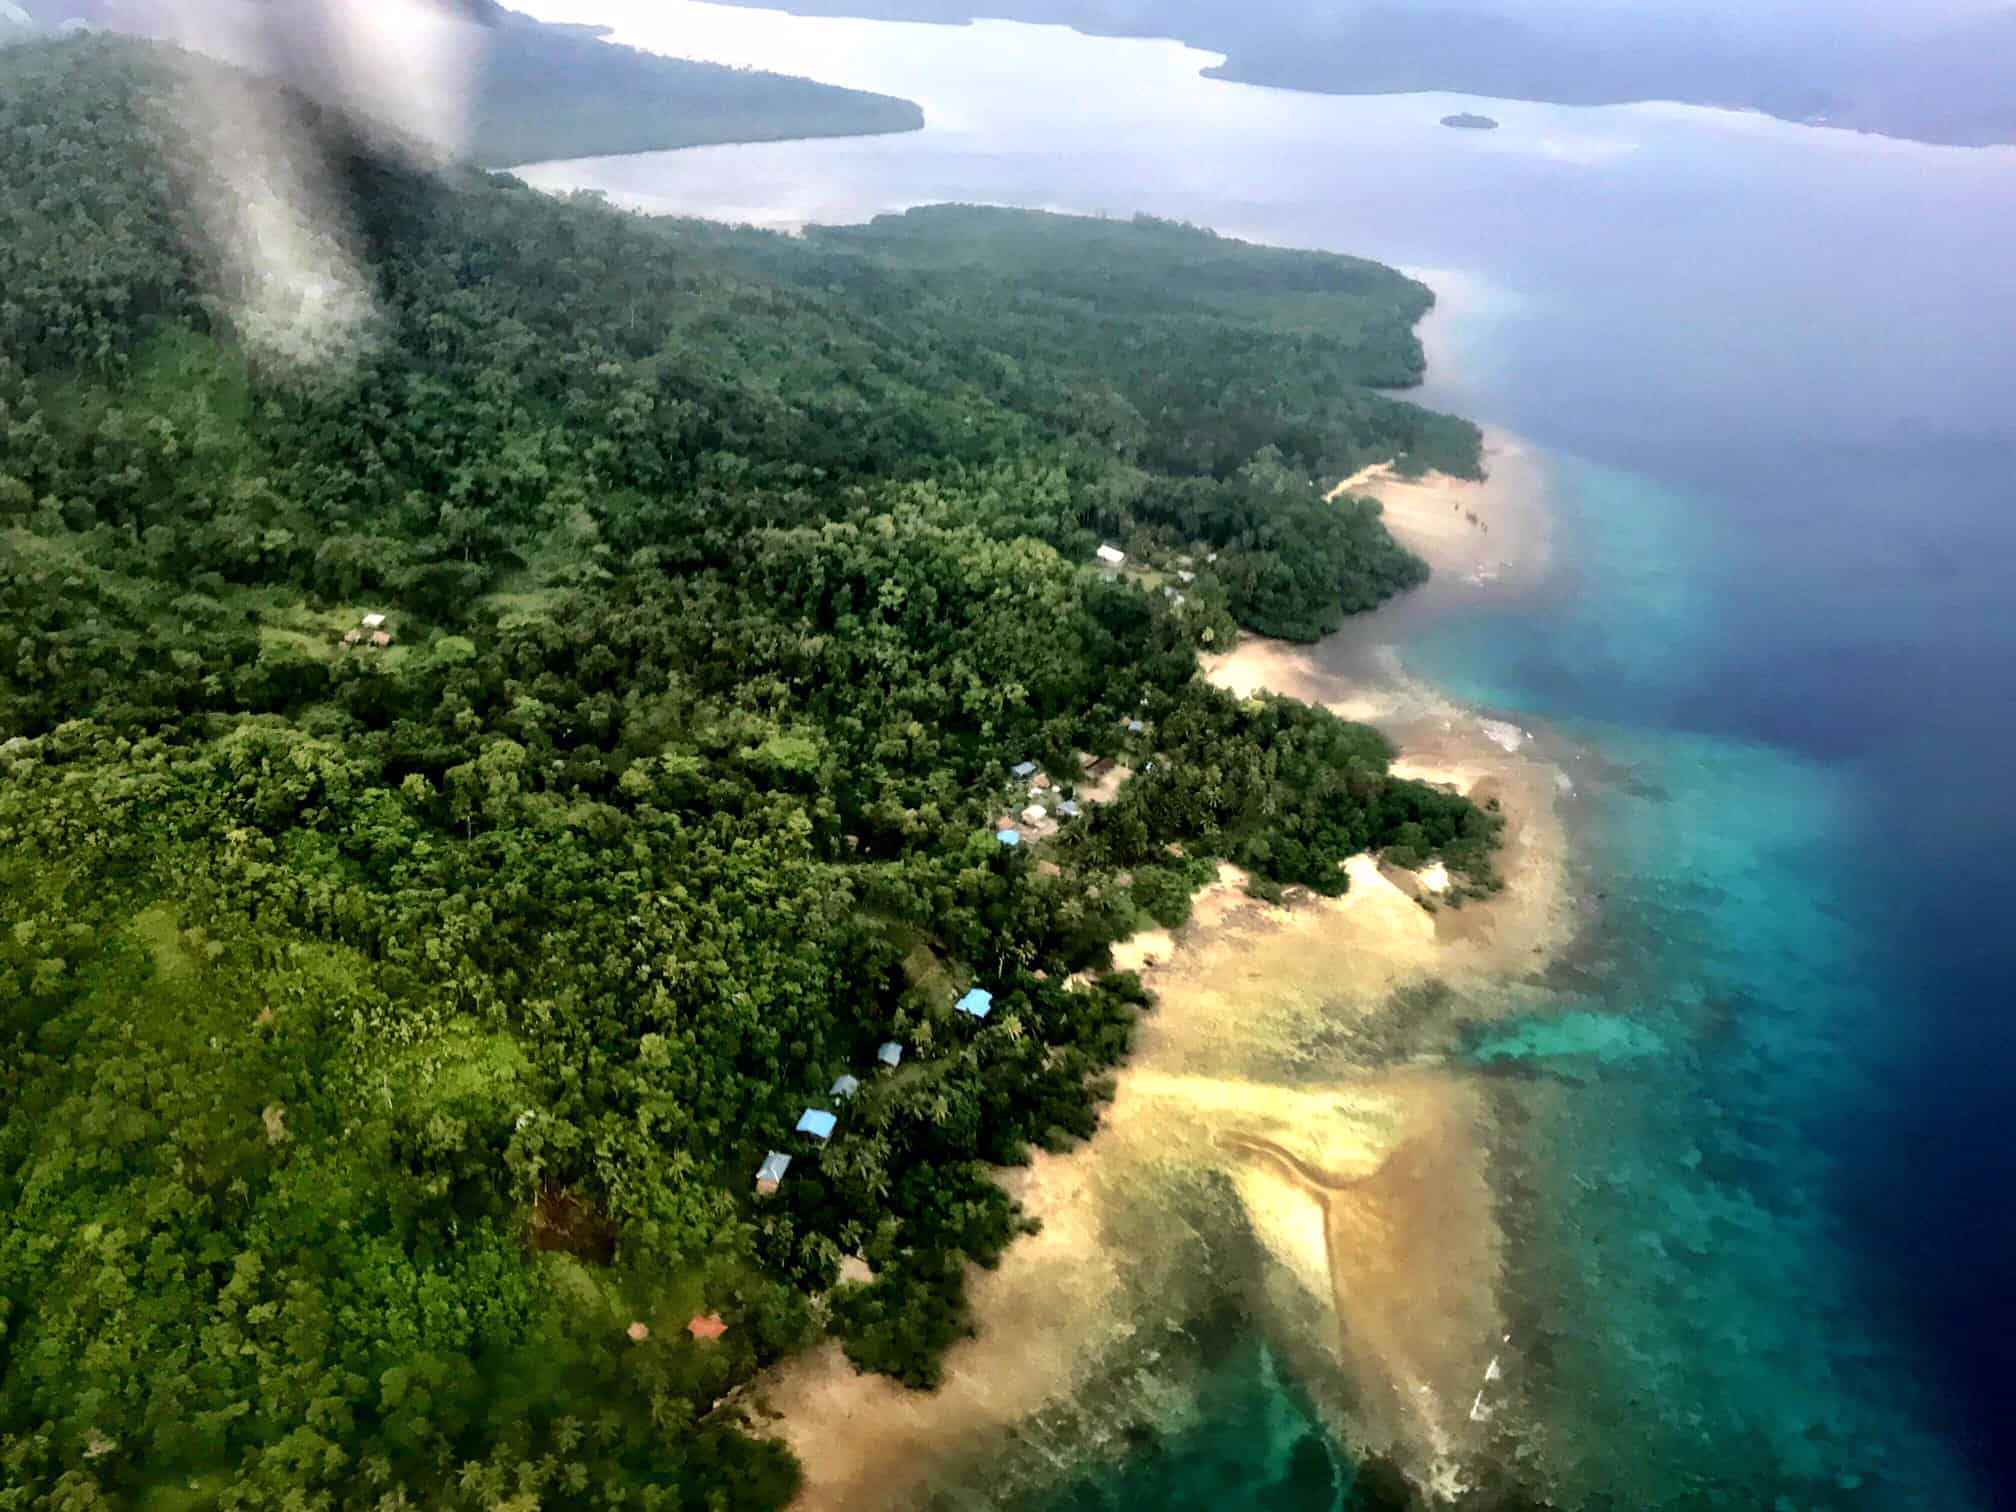 Solomon islands travel guide